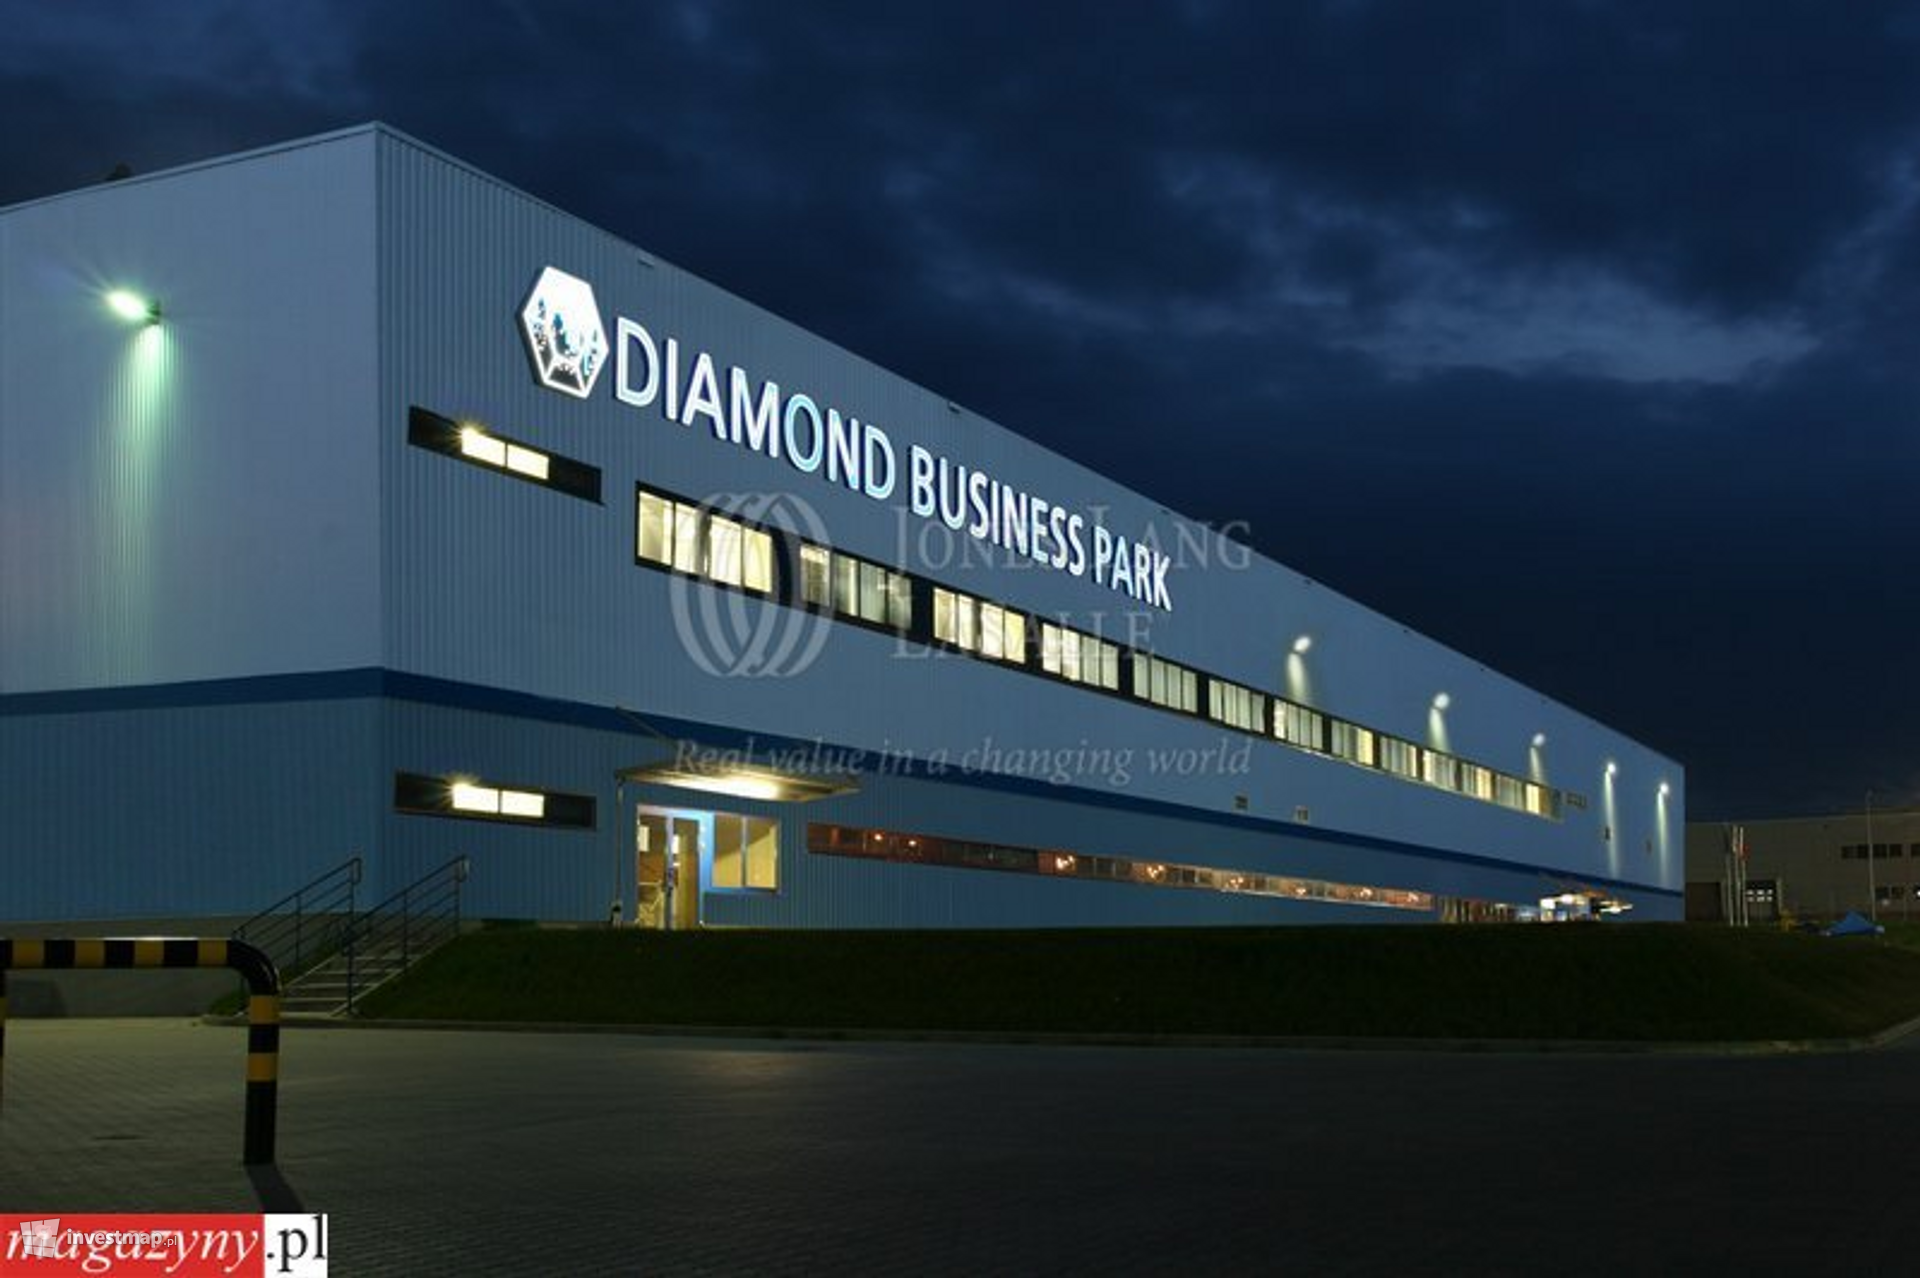 [Gliwice] Diamond Business Park Gliwice